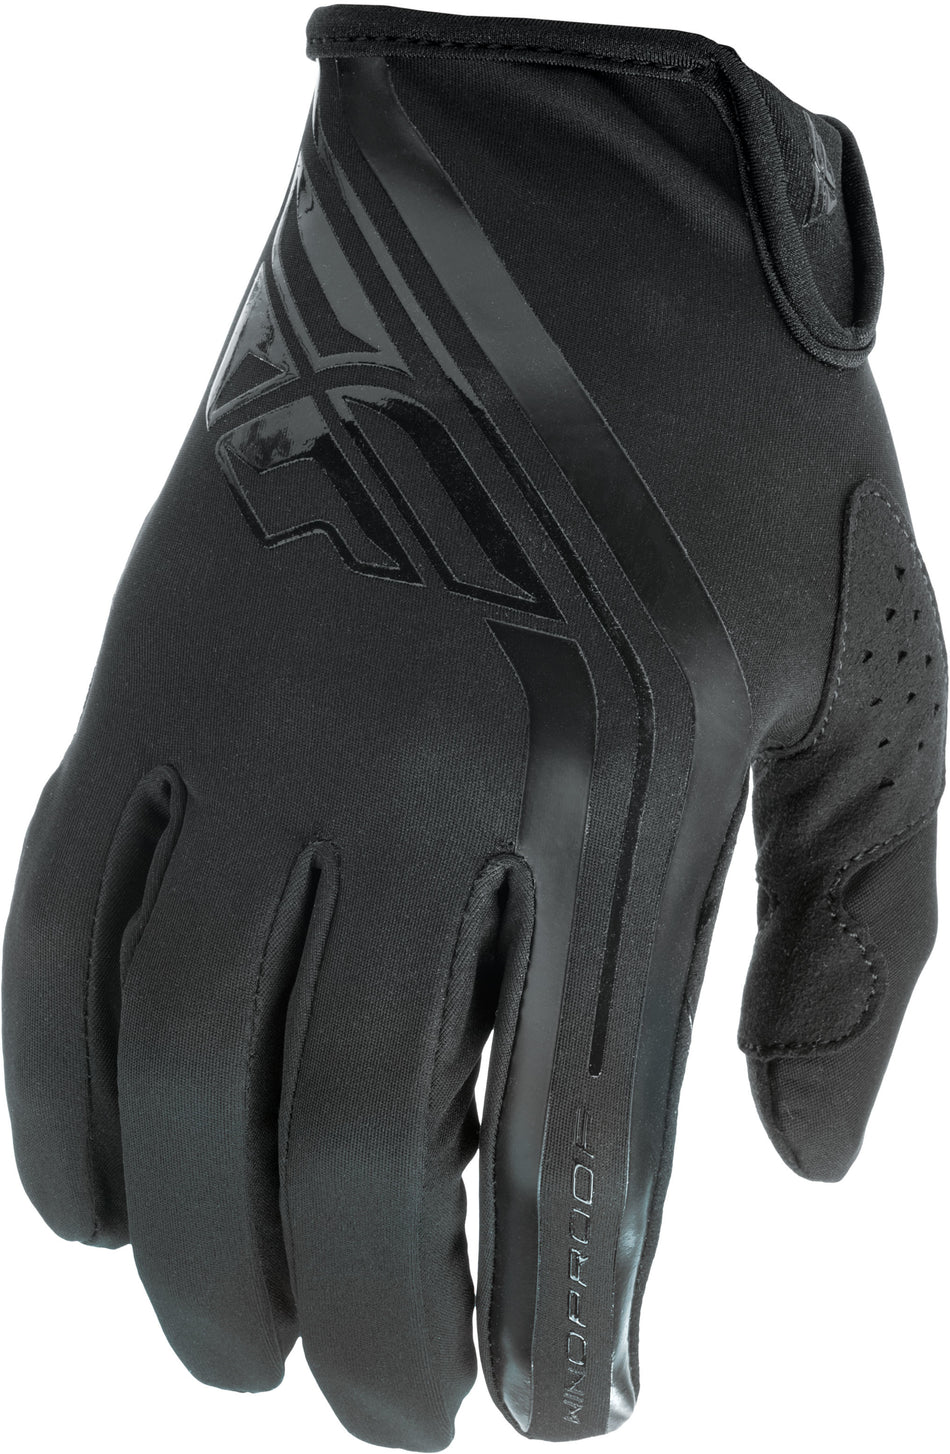 FLY RACING Windproof Gloves Black Sz 10 371-14010